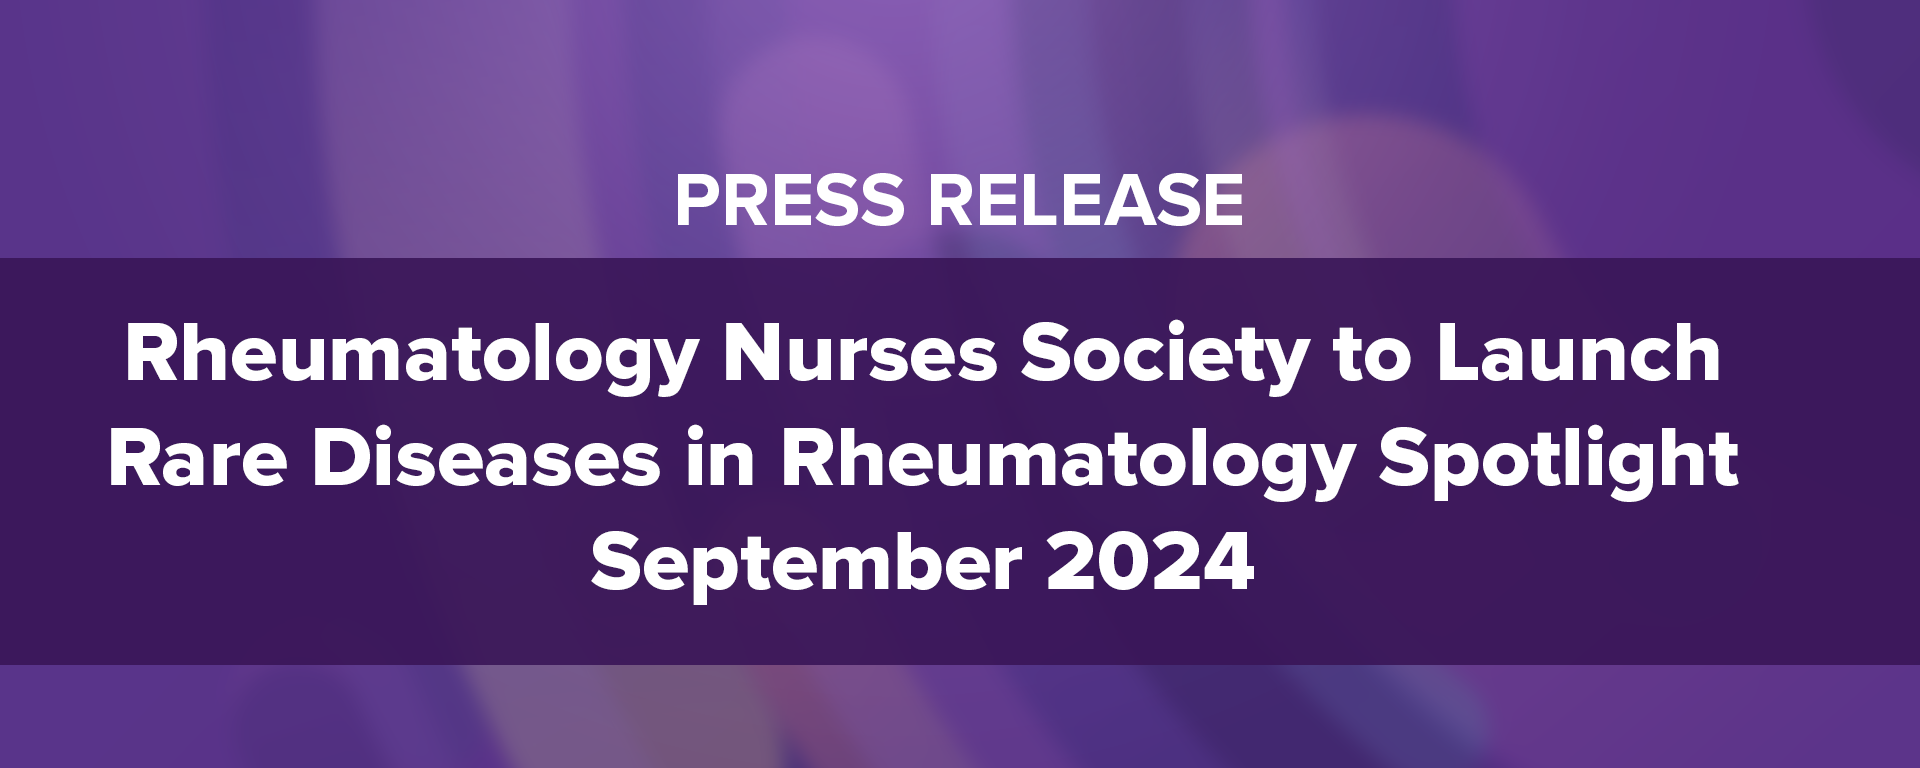 Press Release: Rheumatology Nurses Society to Launch Rare Diseases in Rheumatology Spotlight in September 2024